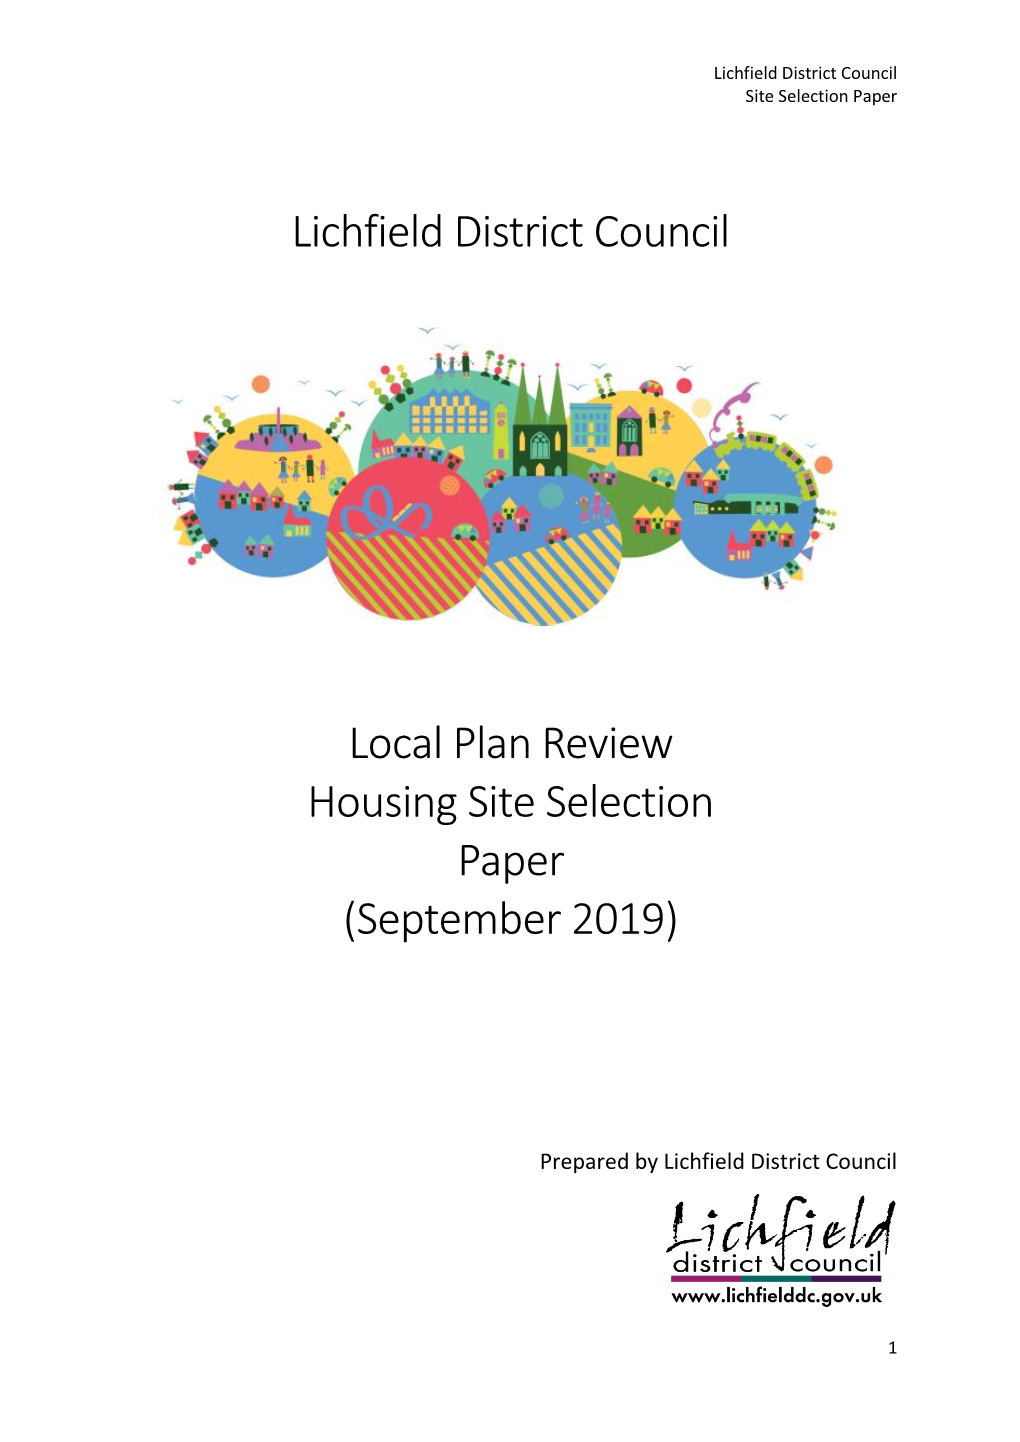 Lichfield District Council Local Plan Review Housing Site Selection Paper